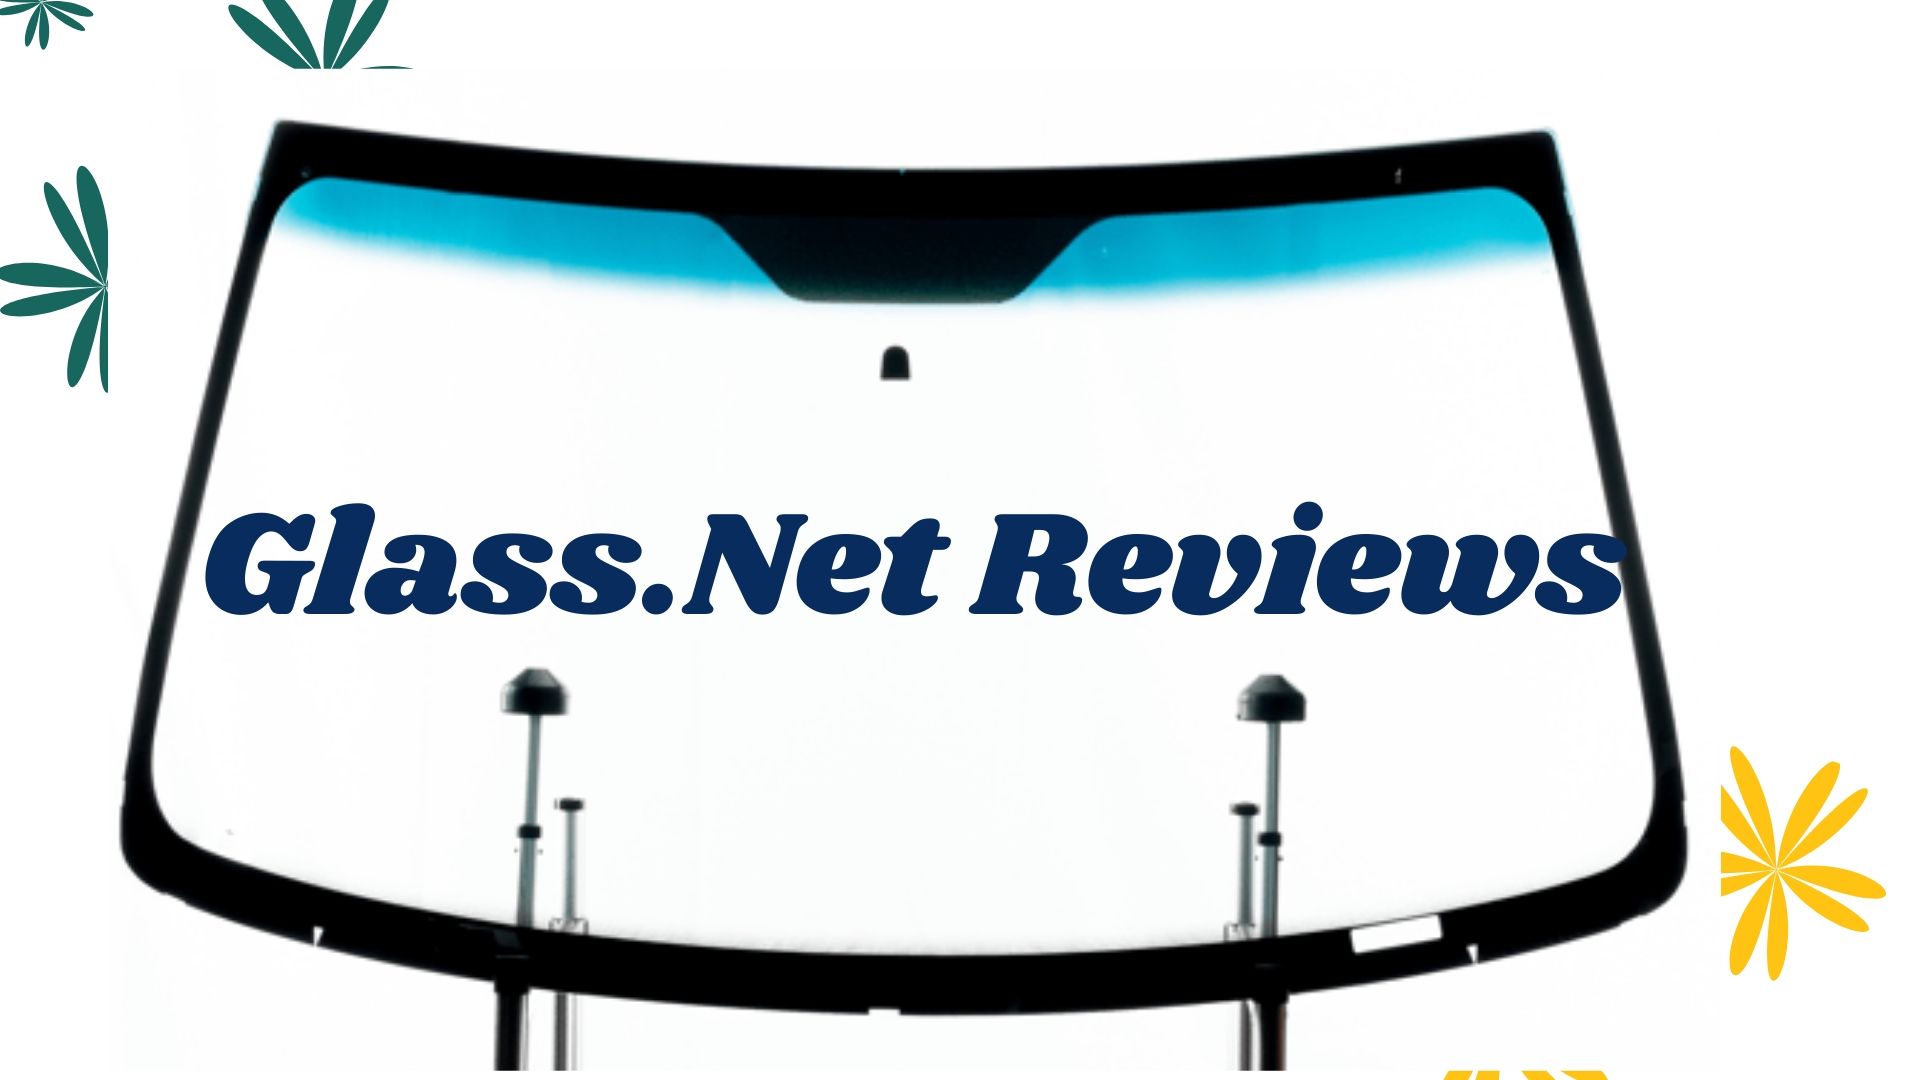 Glass.Net Reviews